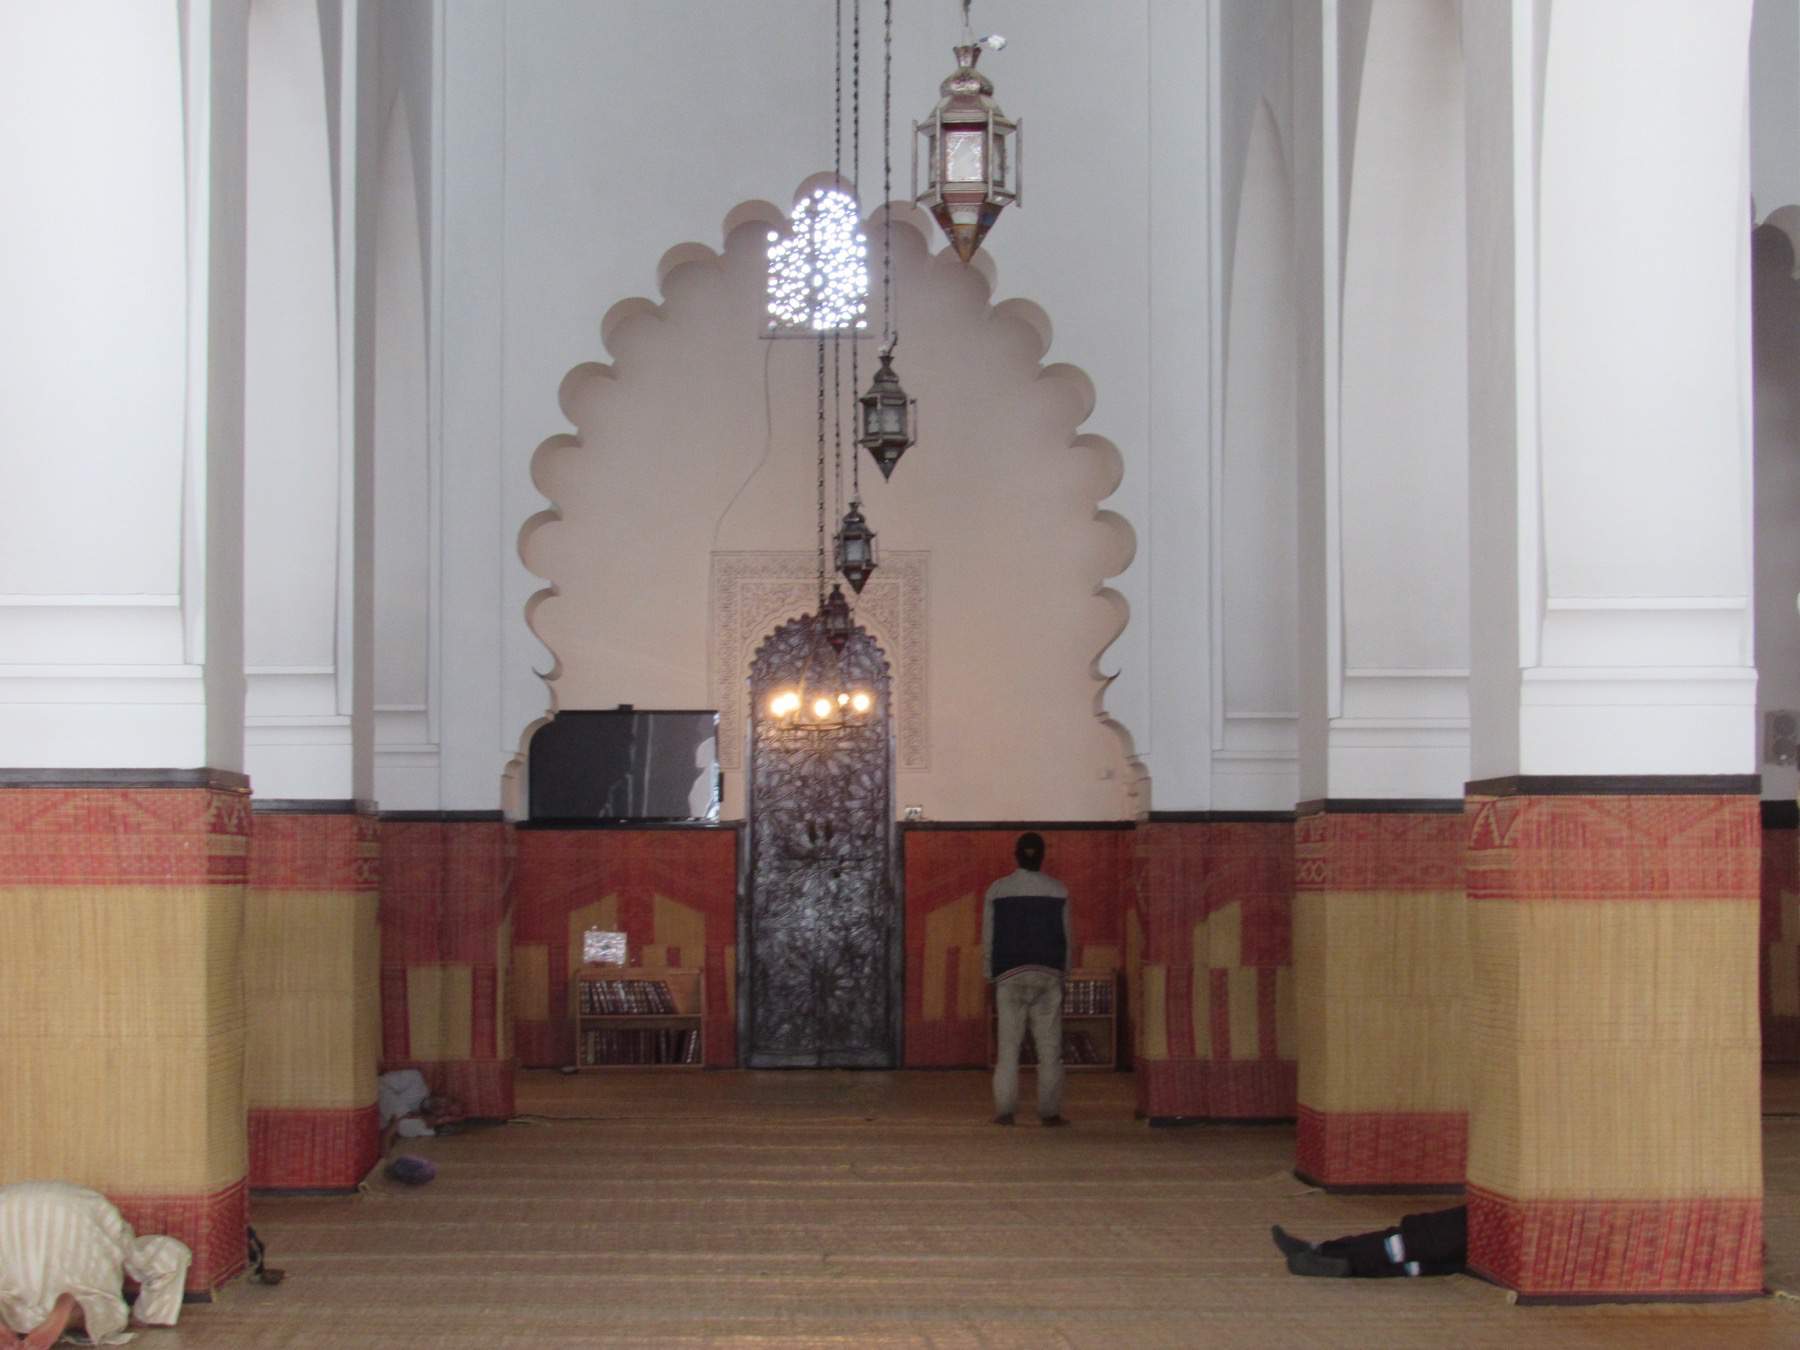 Mosquée Mohammadi - Interior view of Masjid Mohamedi.